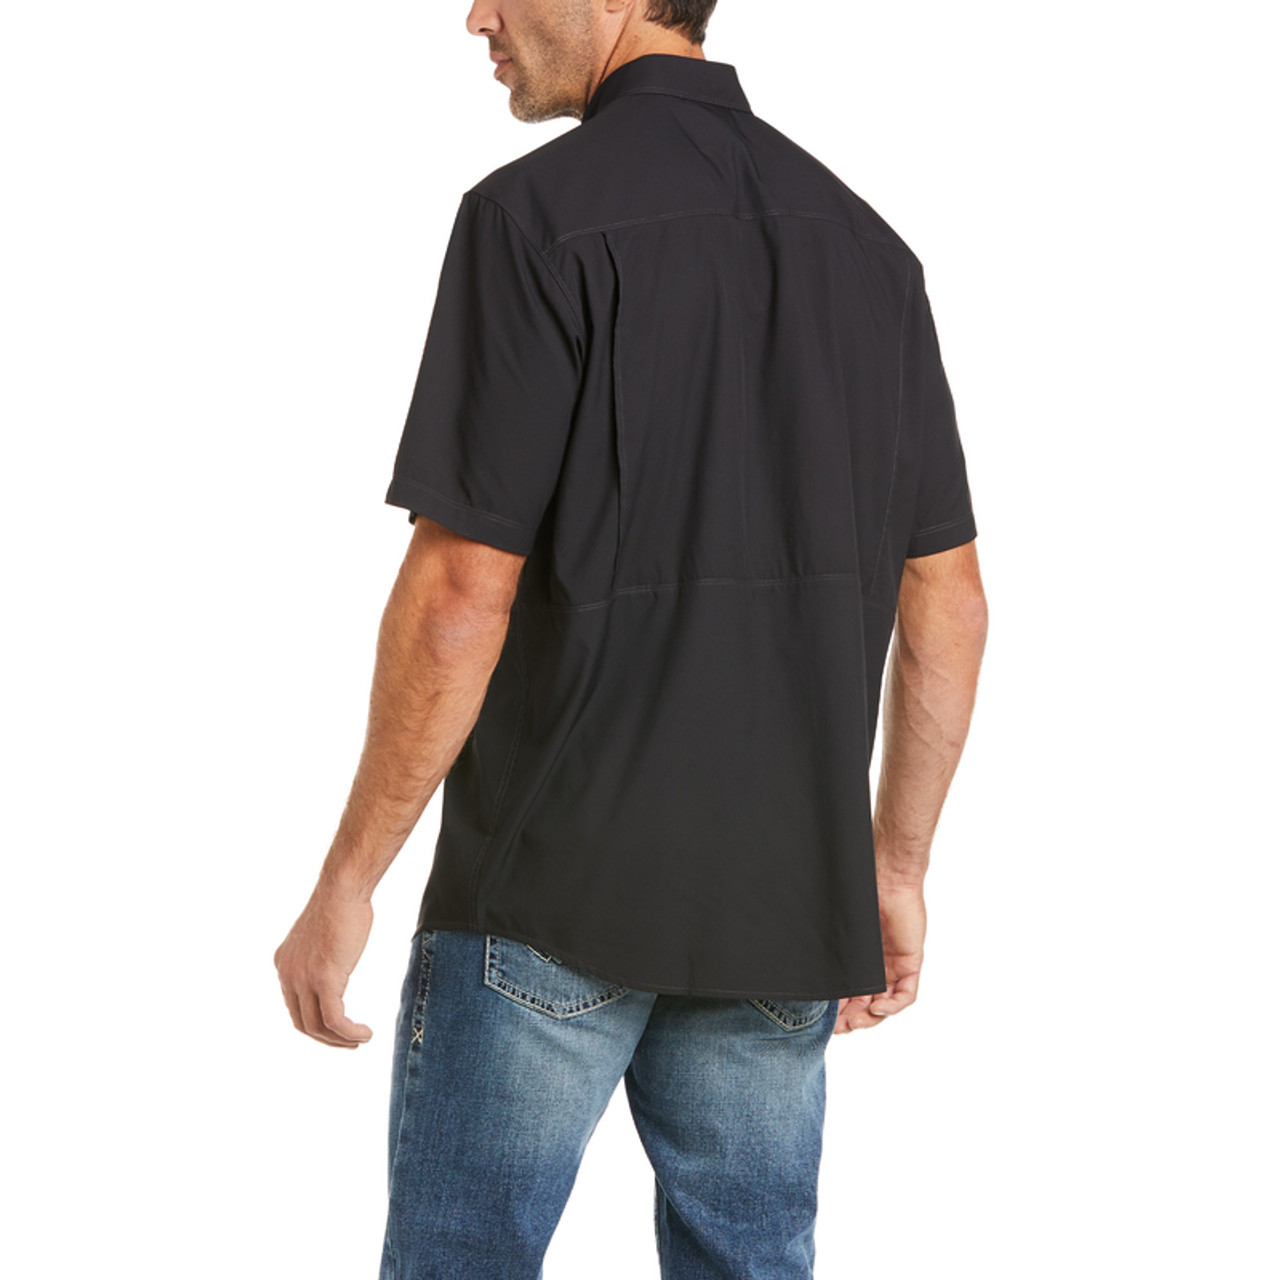 Ariat Men's Short-Sleeve VentTEK Outbound Shirt, Black